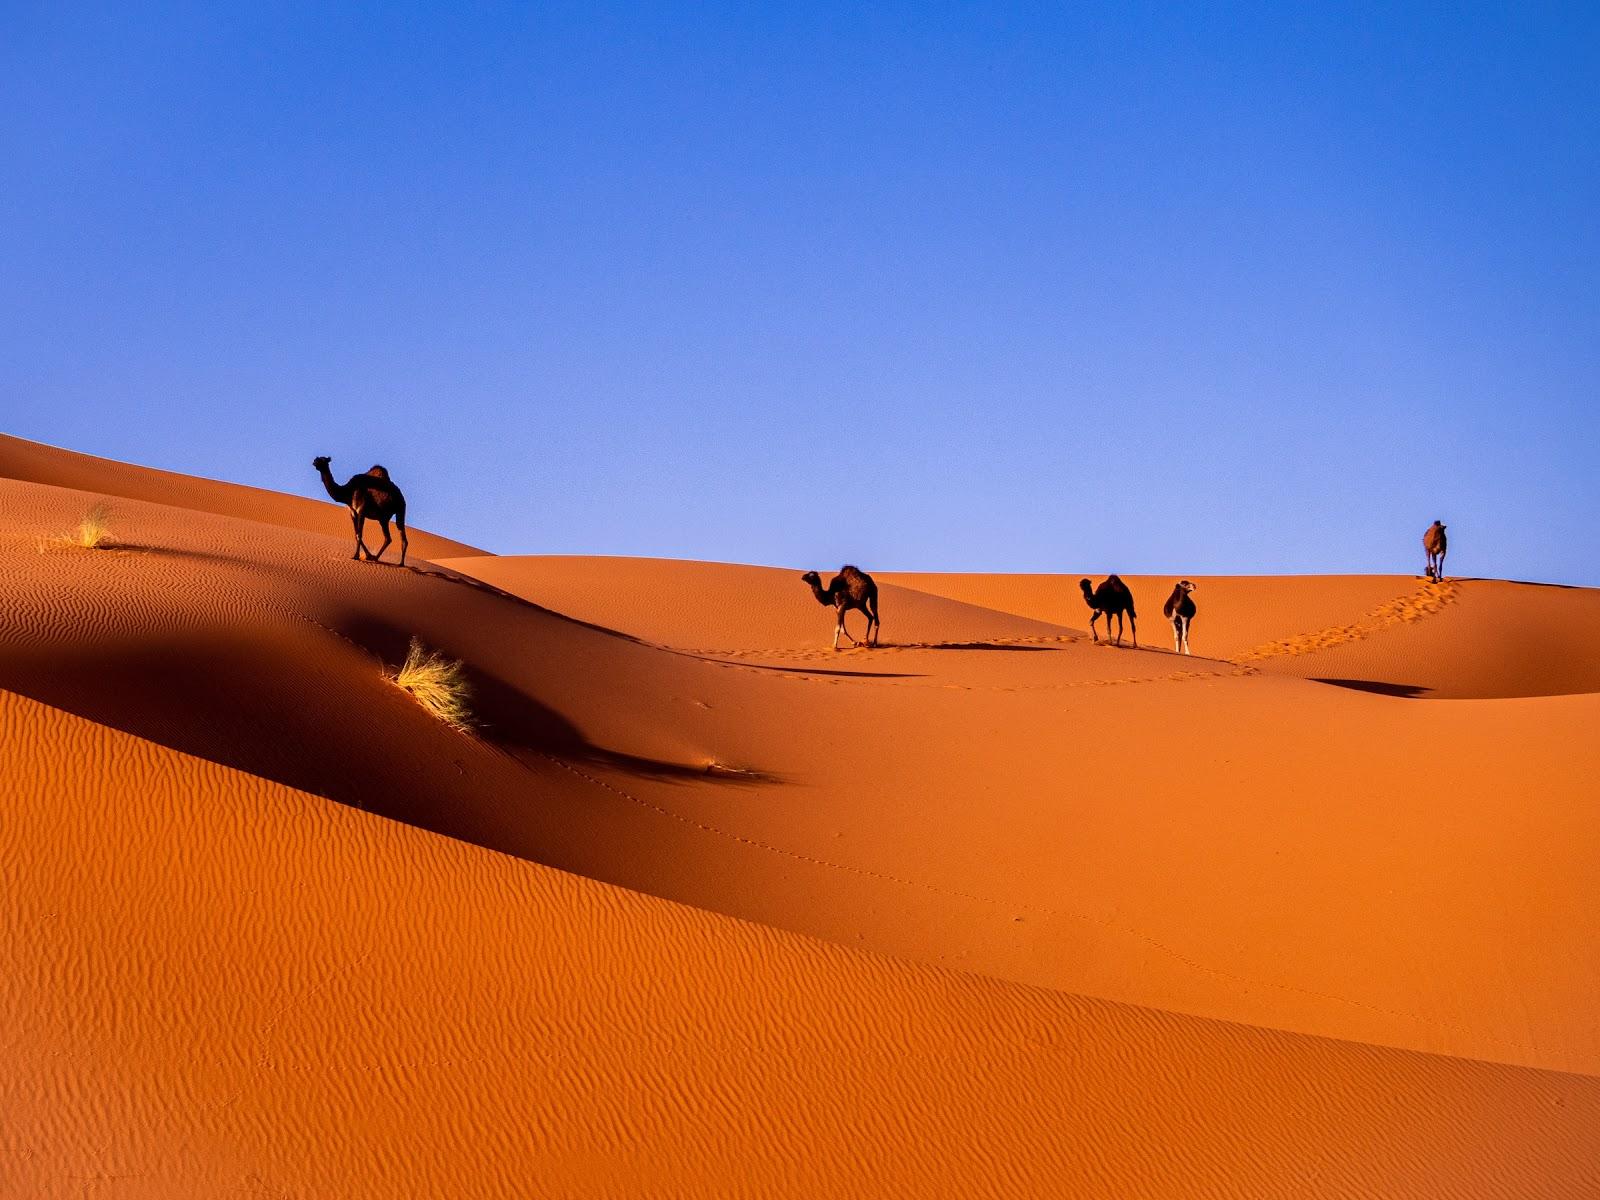 camels trekking the Sahara Desert during the day.